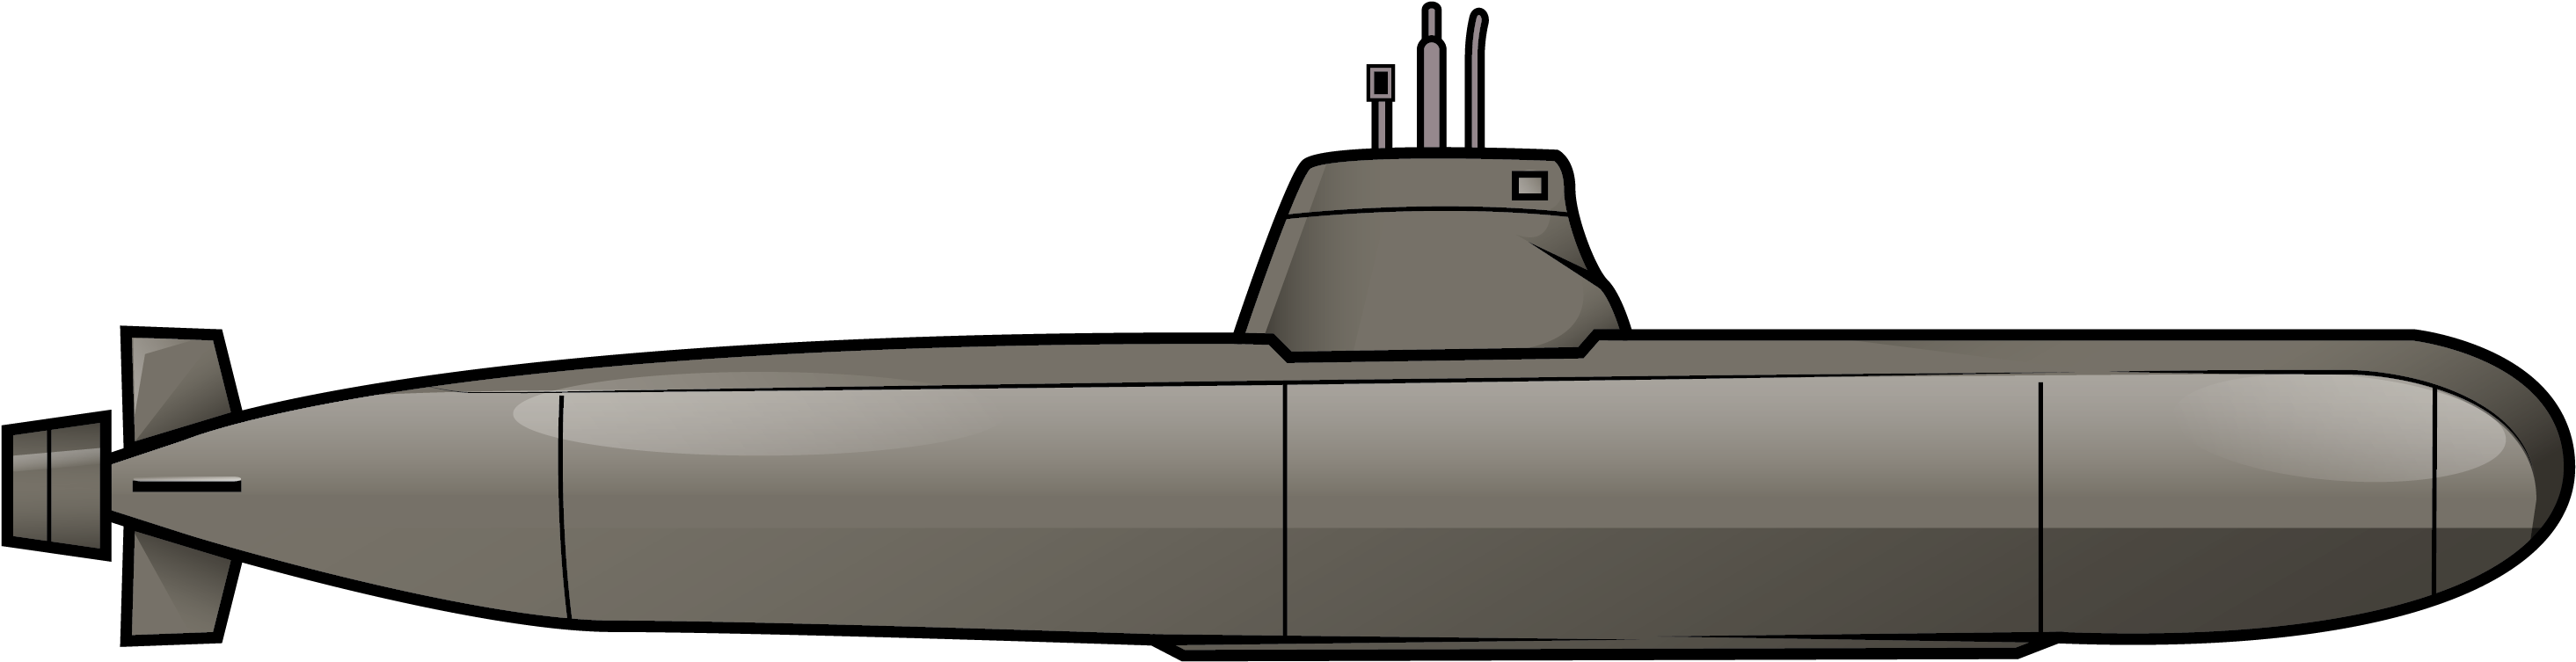 Submarine clipart printable.